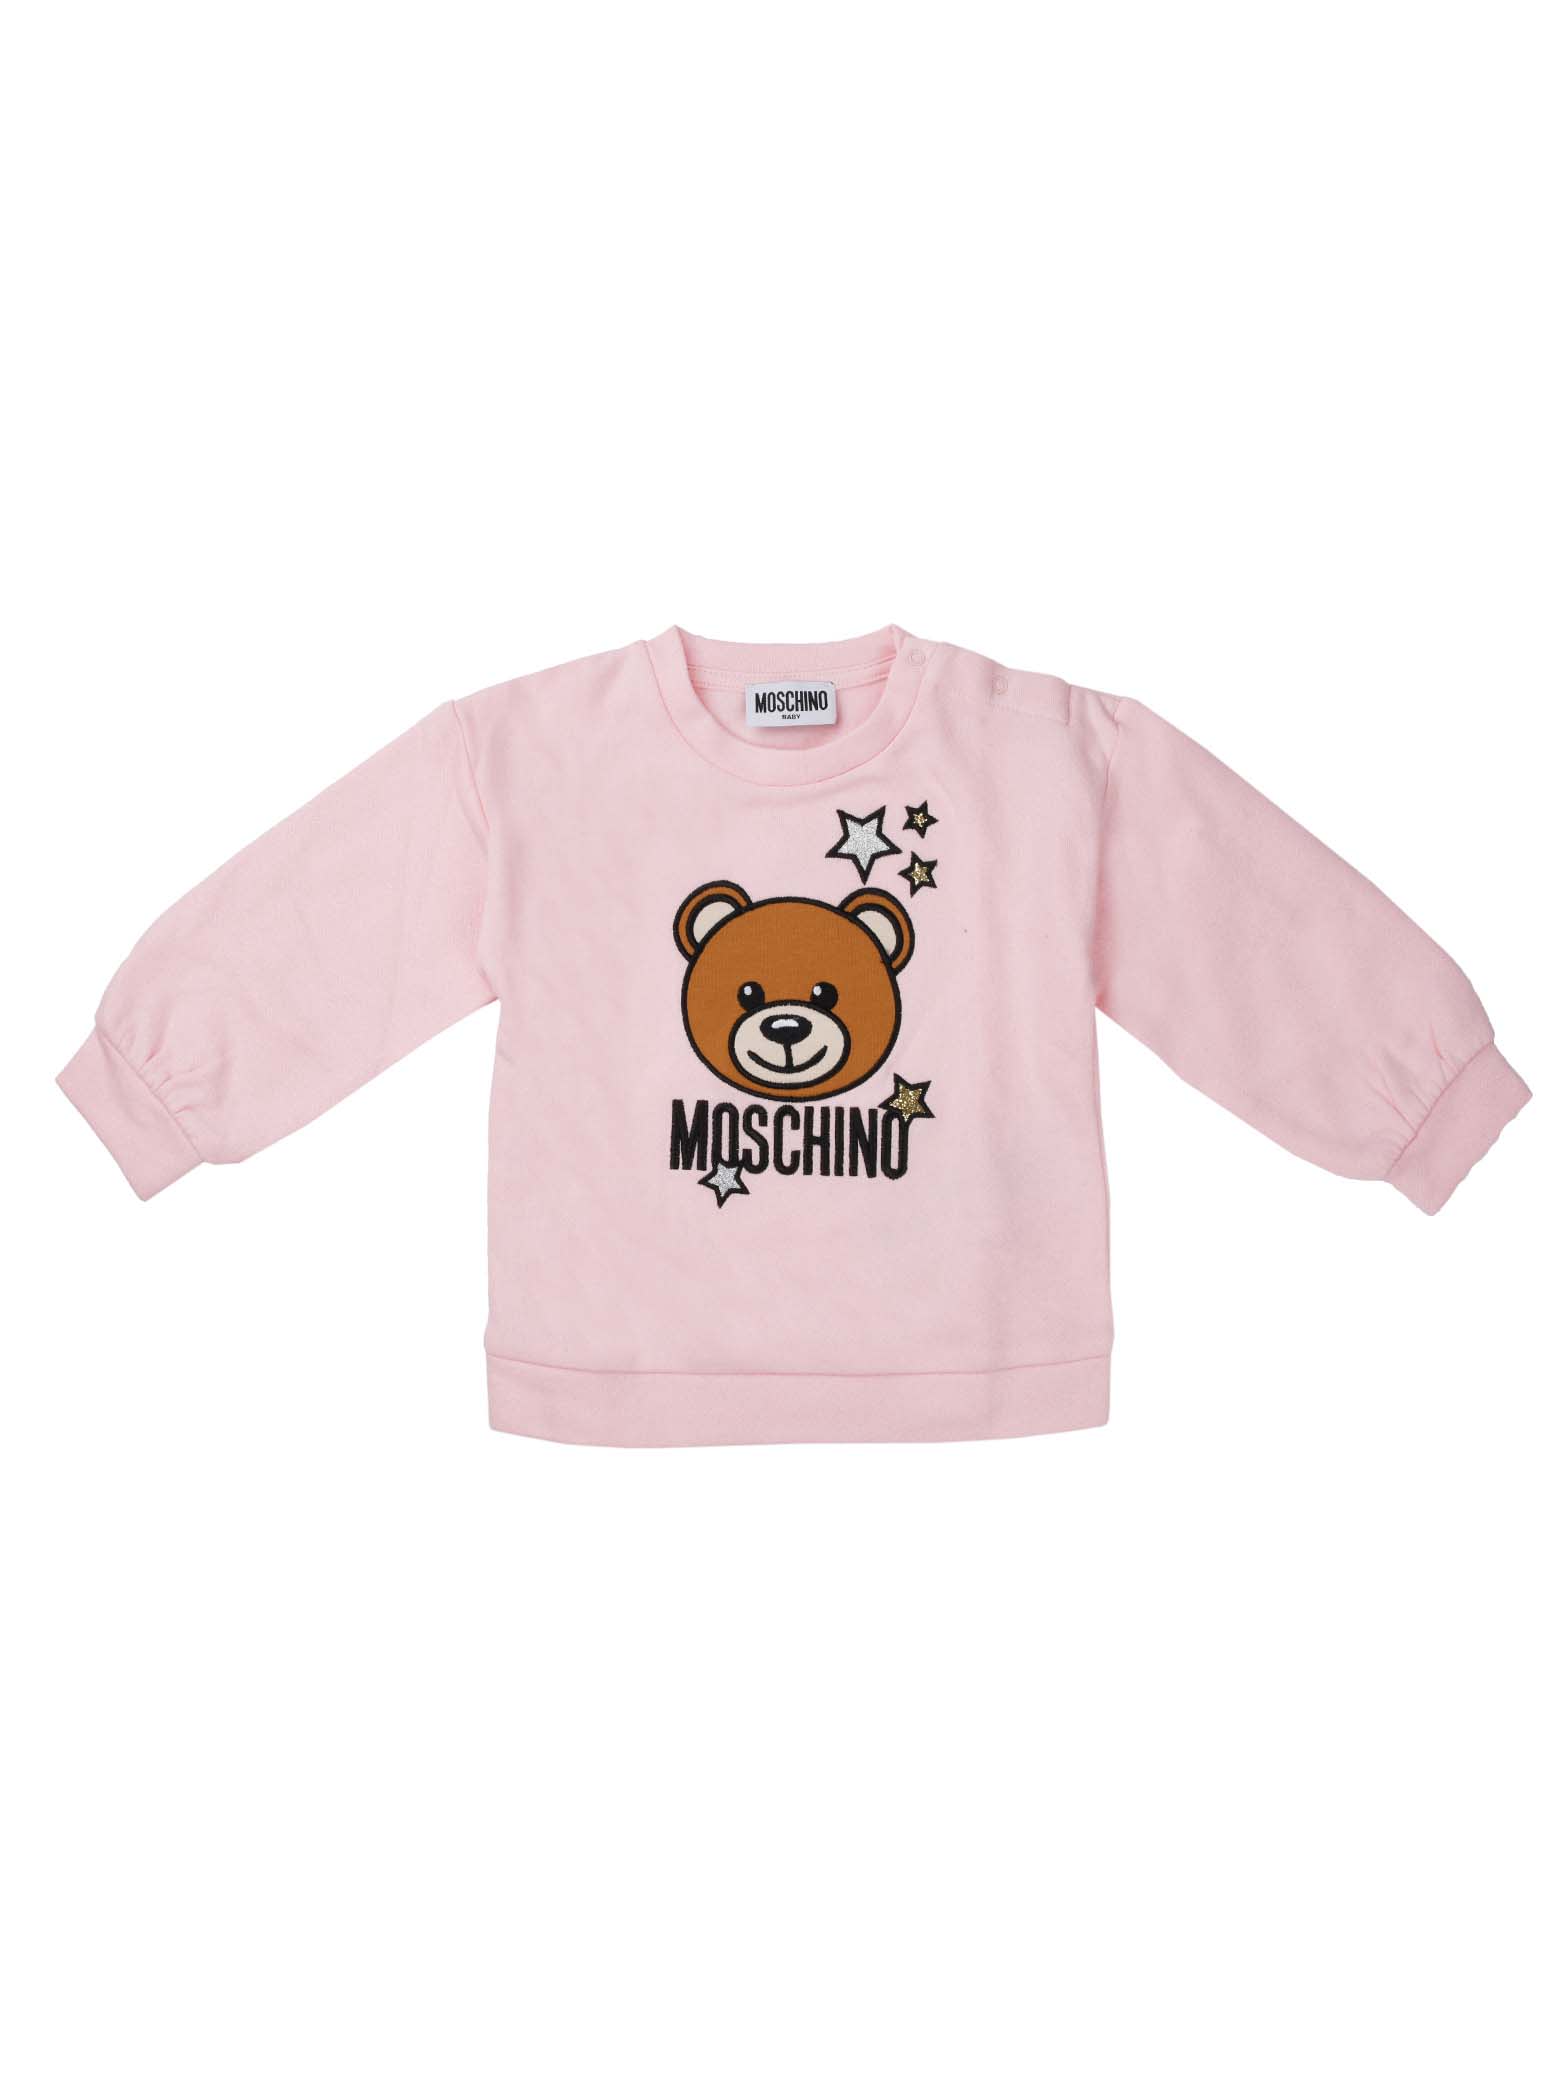 Moschino Pink Crew Neck Sweatshirt With Bear